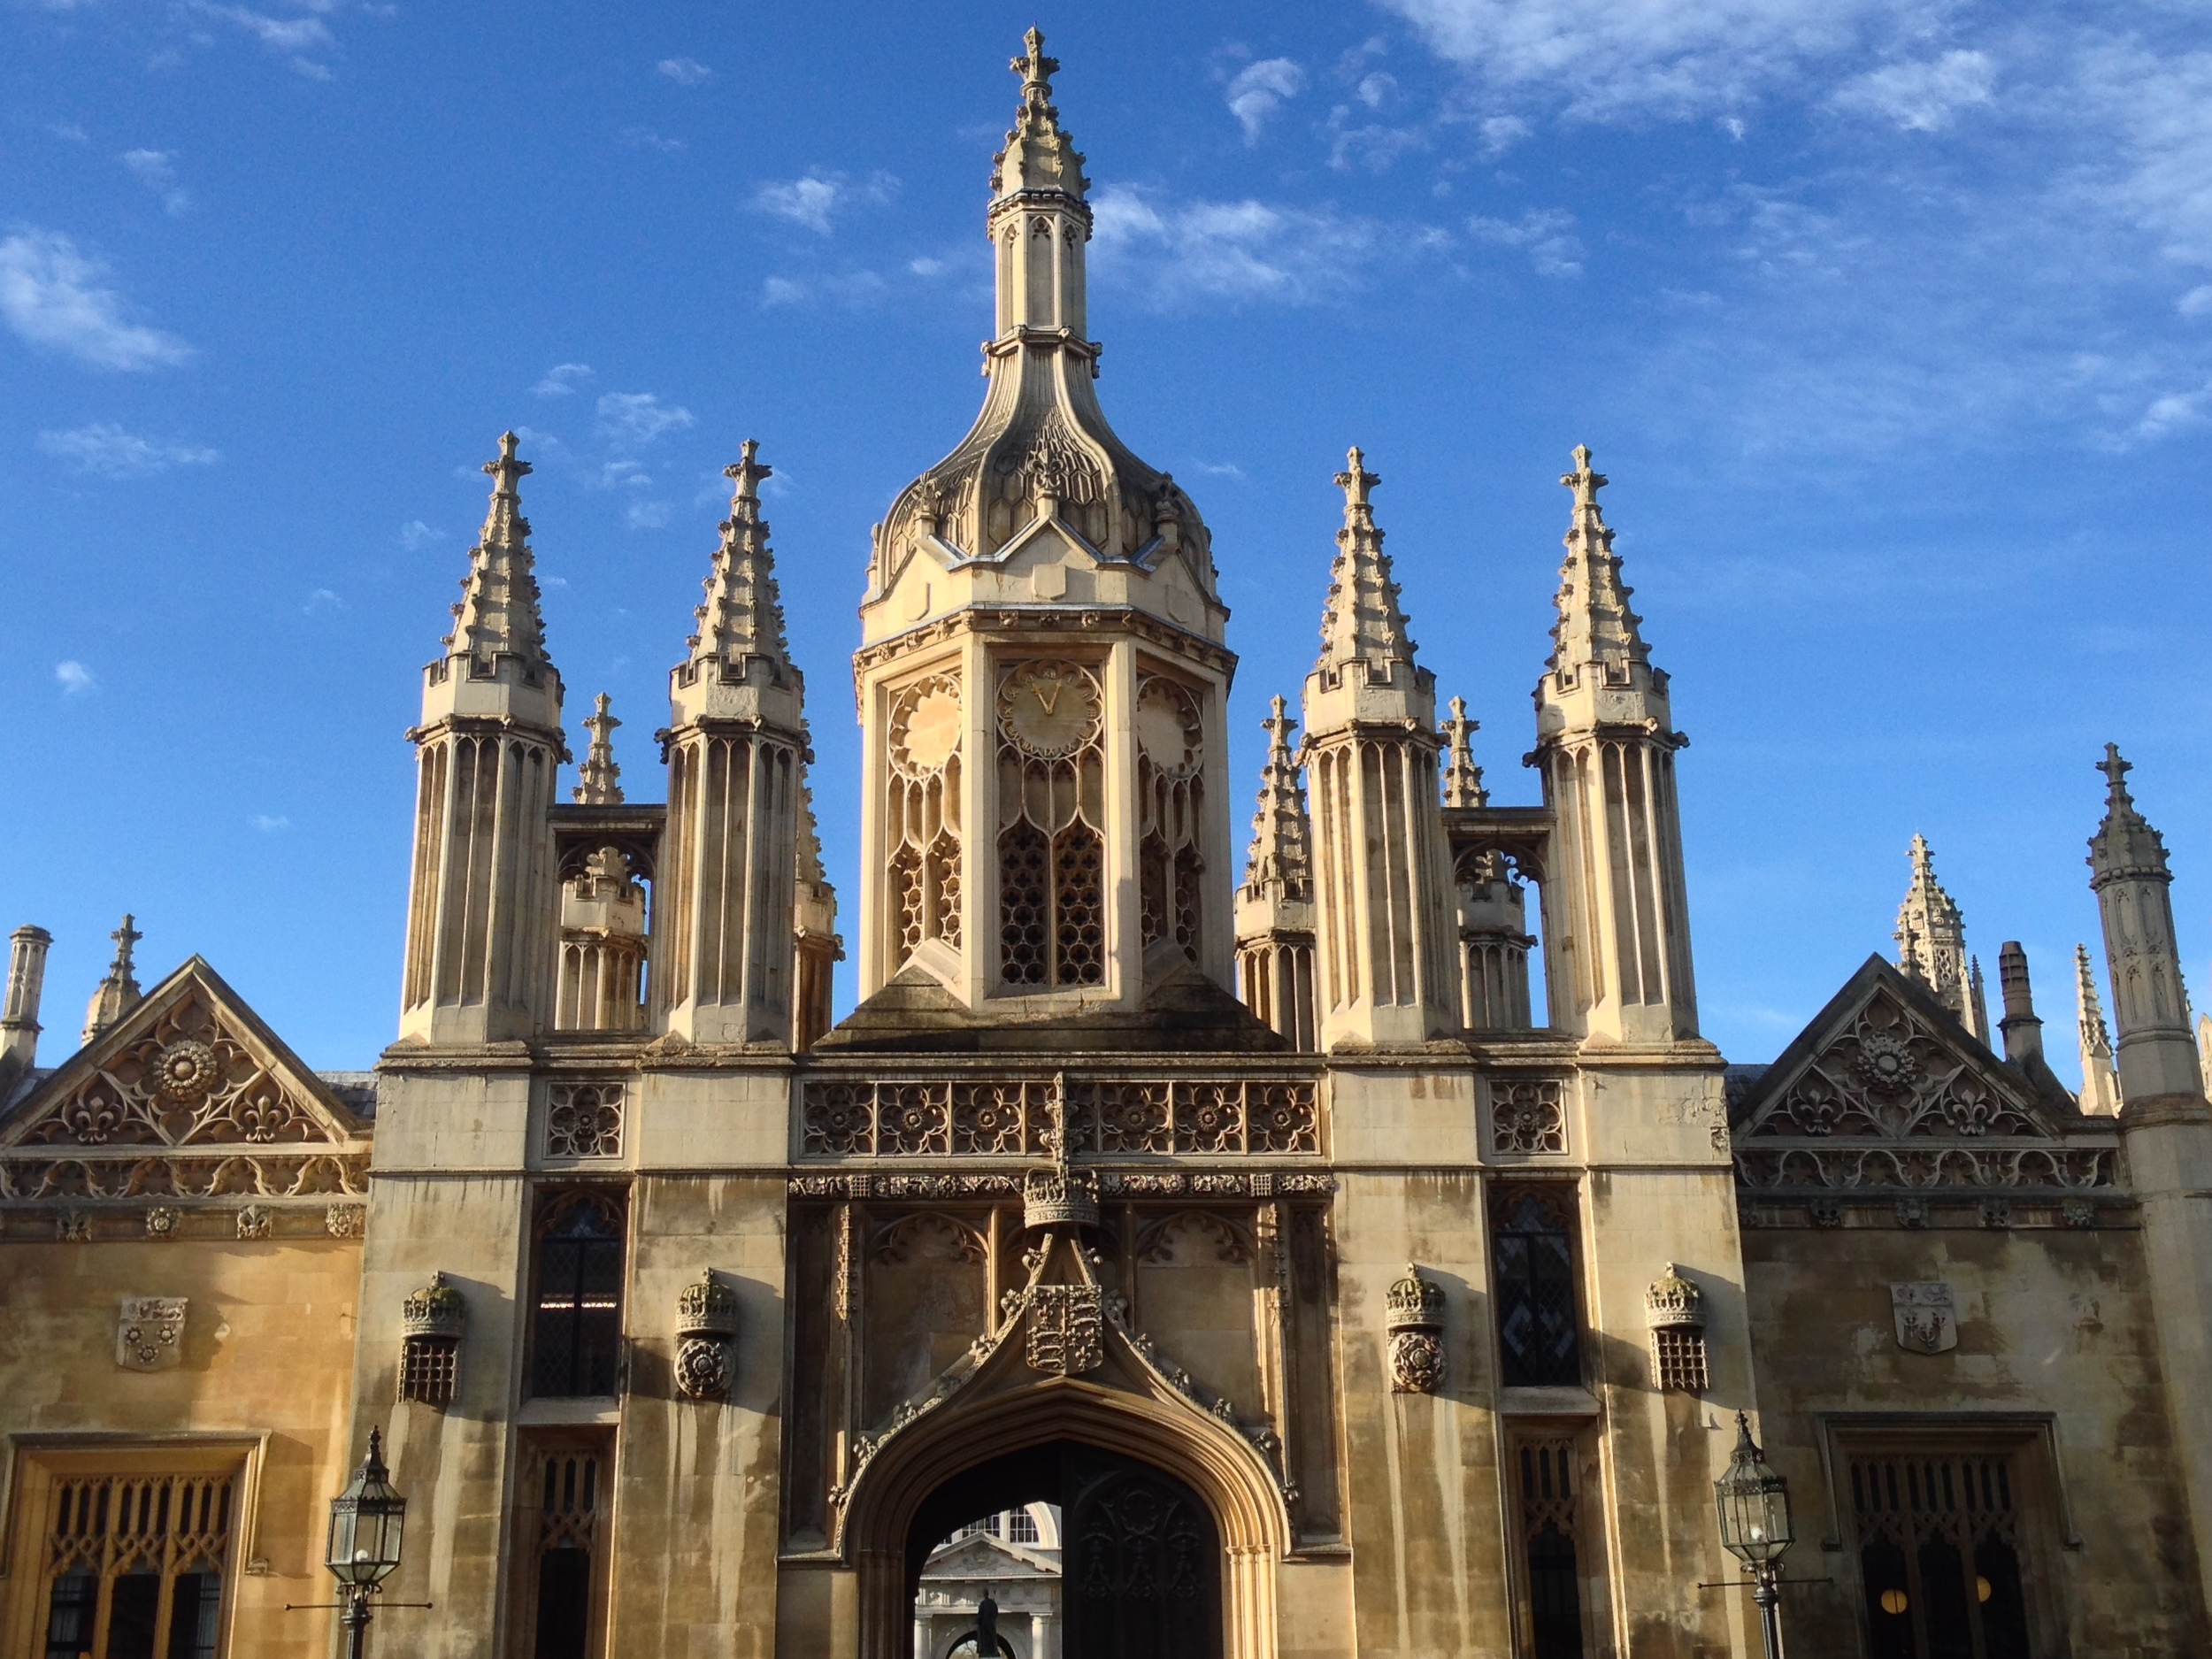  King's College, University of Cambridge - Cambridge, UK 